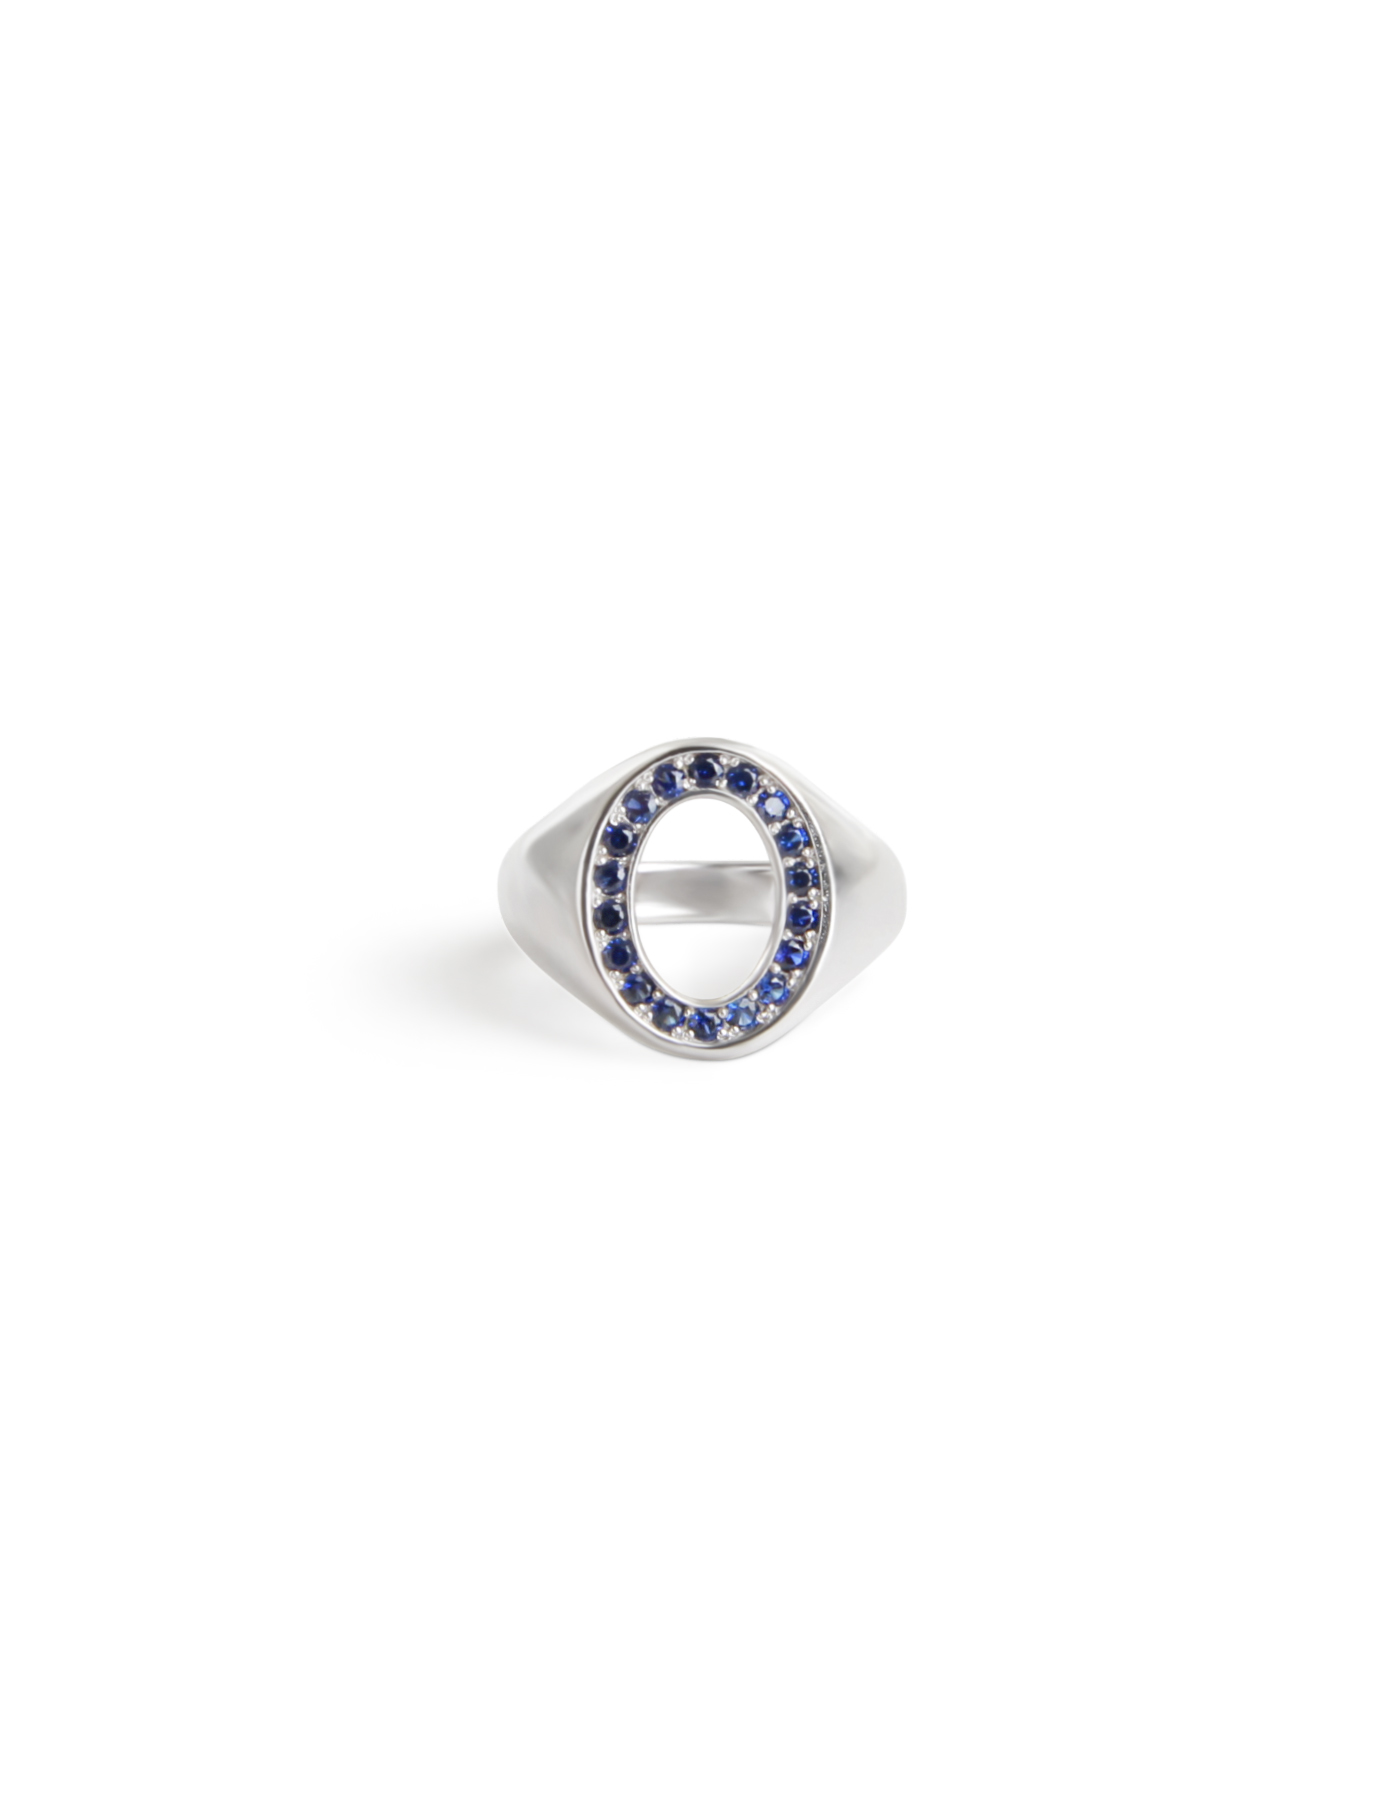 LY Ring (Blue Saph)